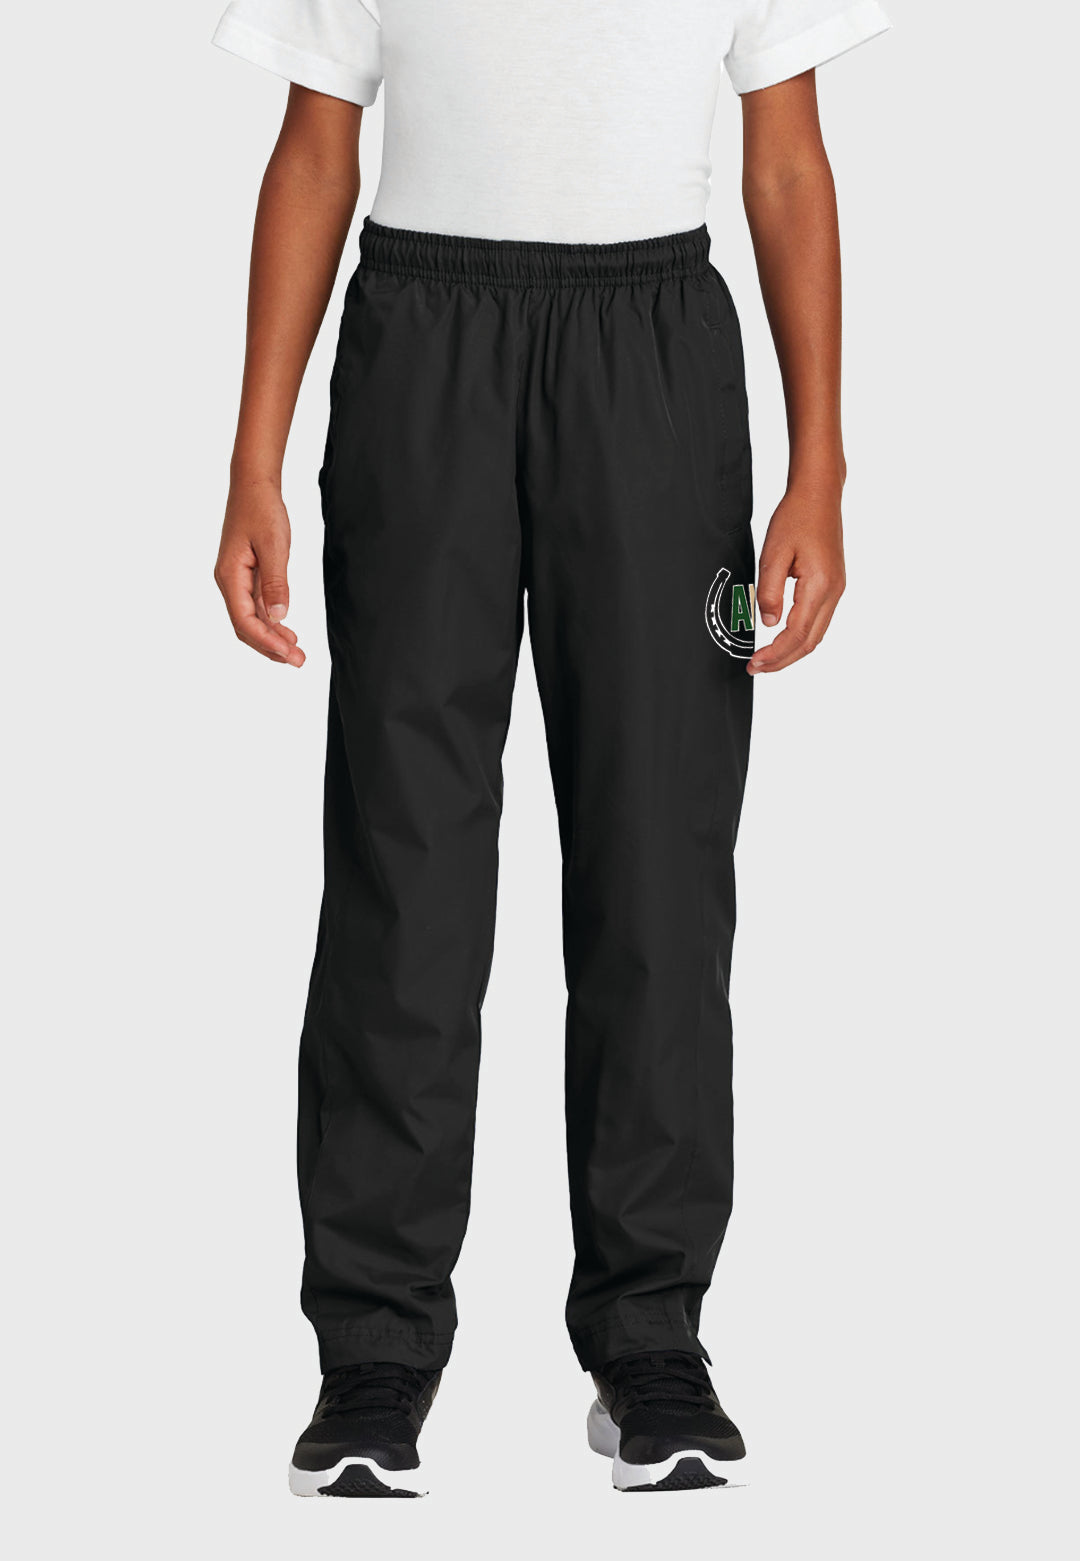 Amblefoot Farms Sport-Tek® Black Pull-On Wind Pant (Unisex) - Adult + Youth Sizes